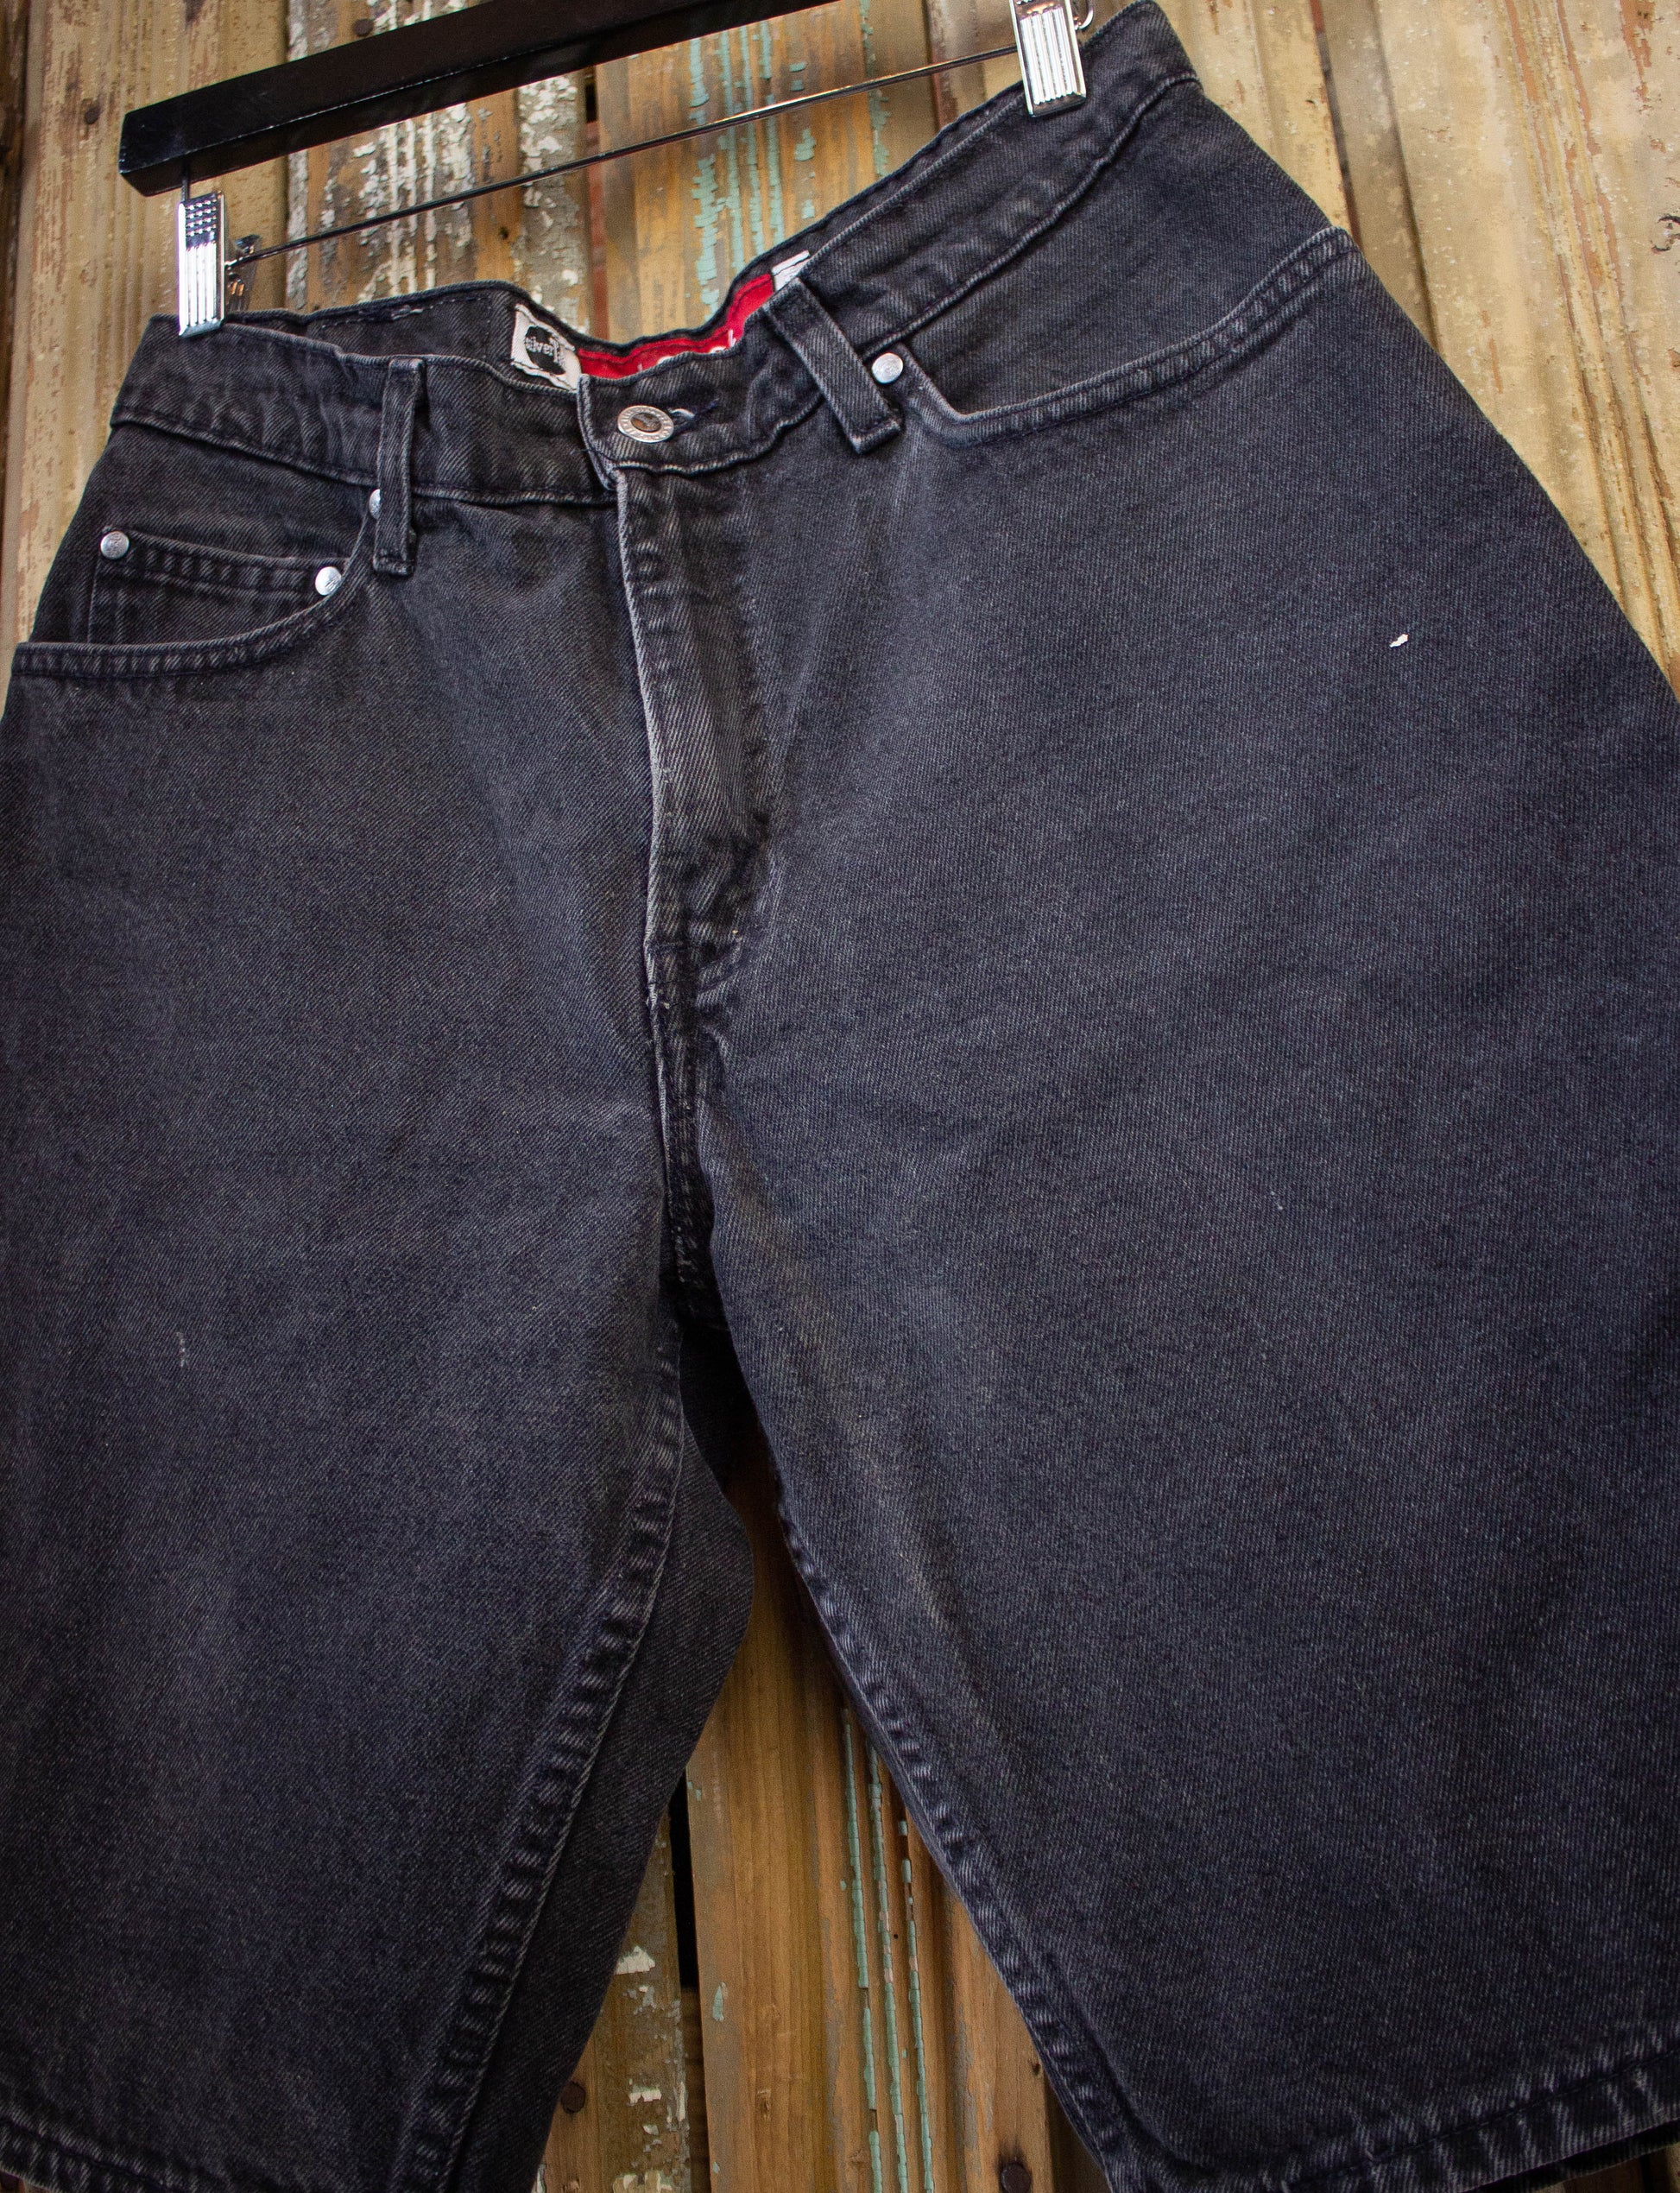 Vintage Levi's Silver Tab Demin Shorts 90s Black 30w